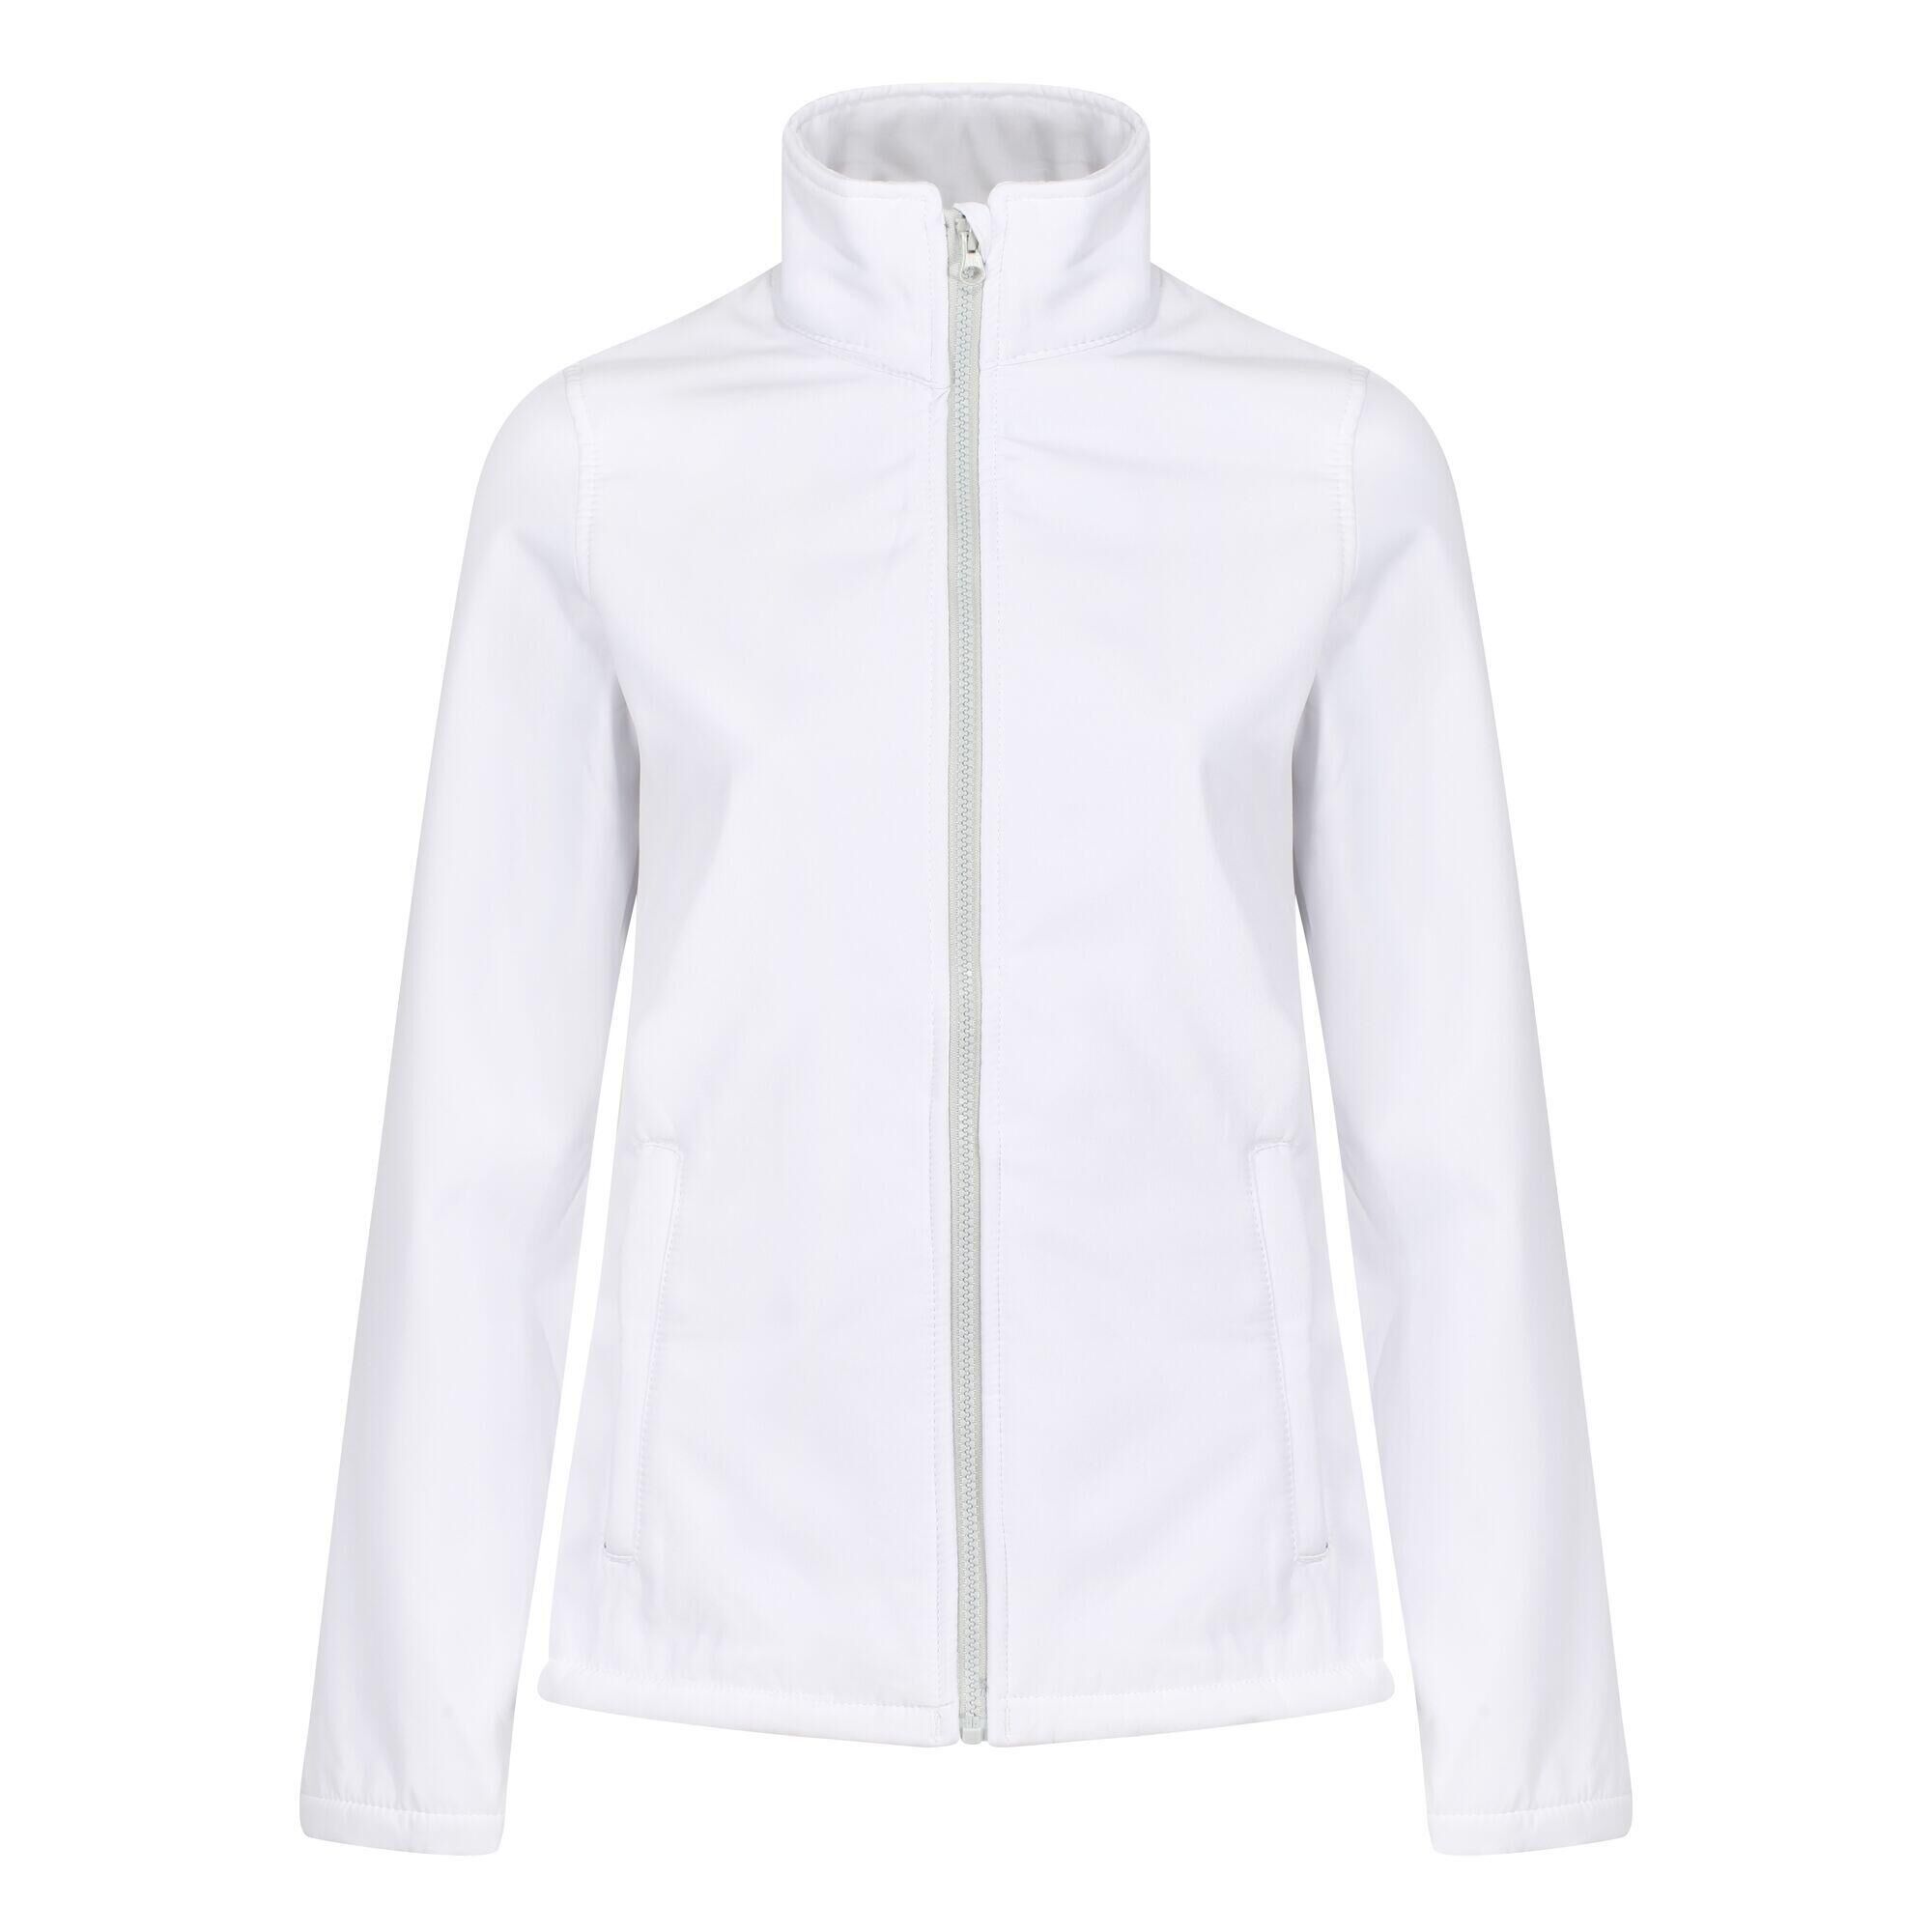 REGATTA Standout Womens/Ladies Ablaze Printable Soft Shell Jacket (White/Light Steel)